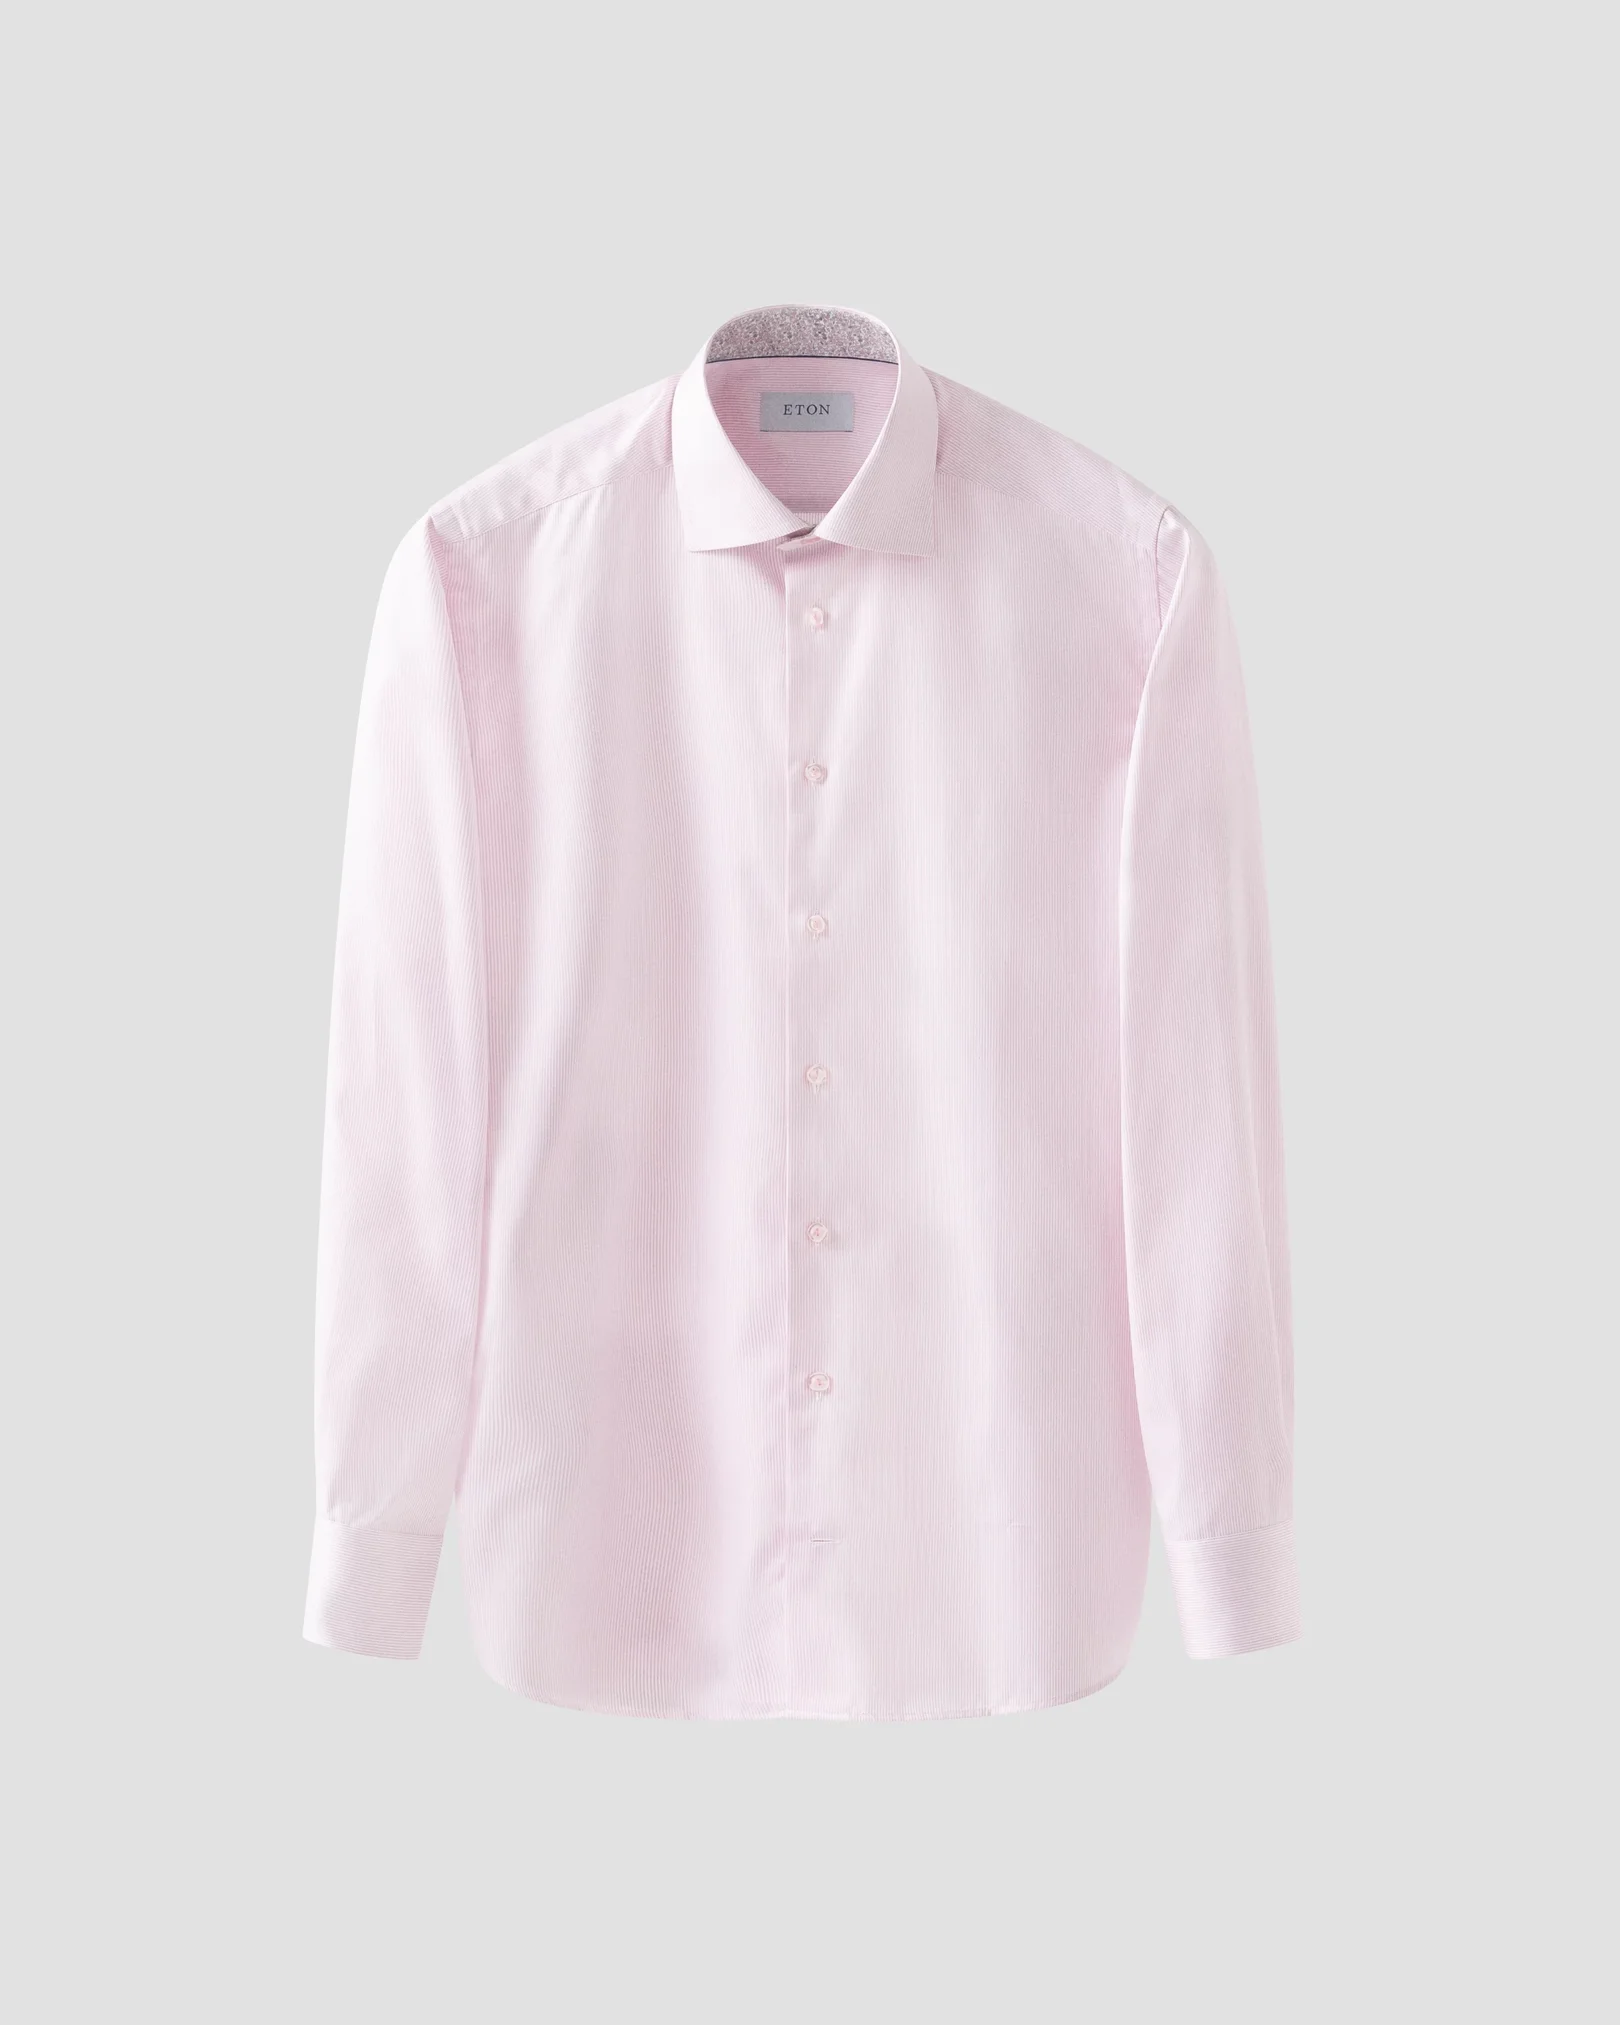 Eton - pink twill contrast shirt